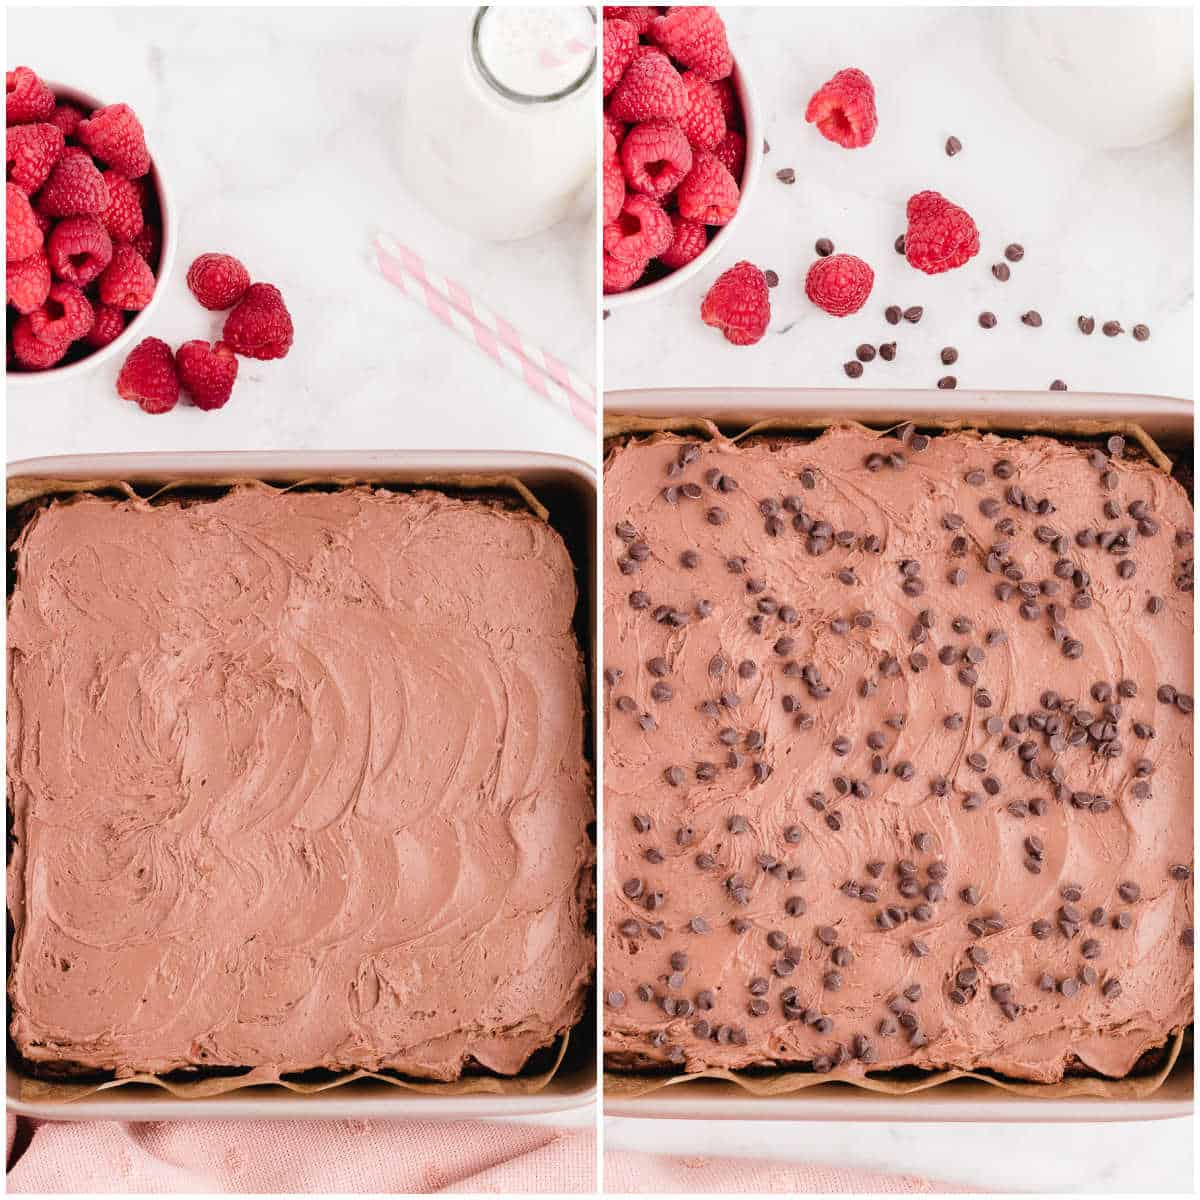 Steps to make chocolate raspberry brownies.